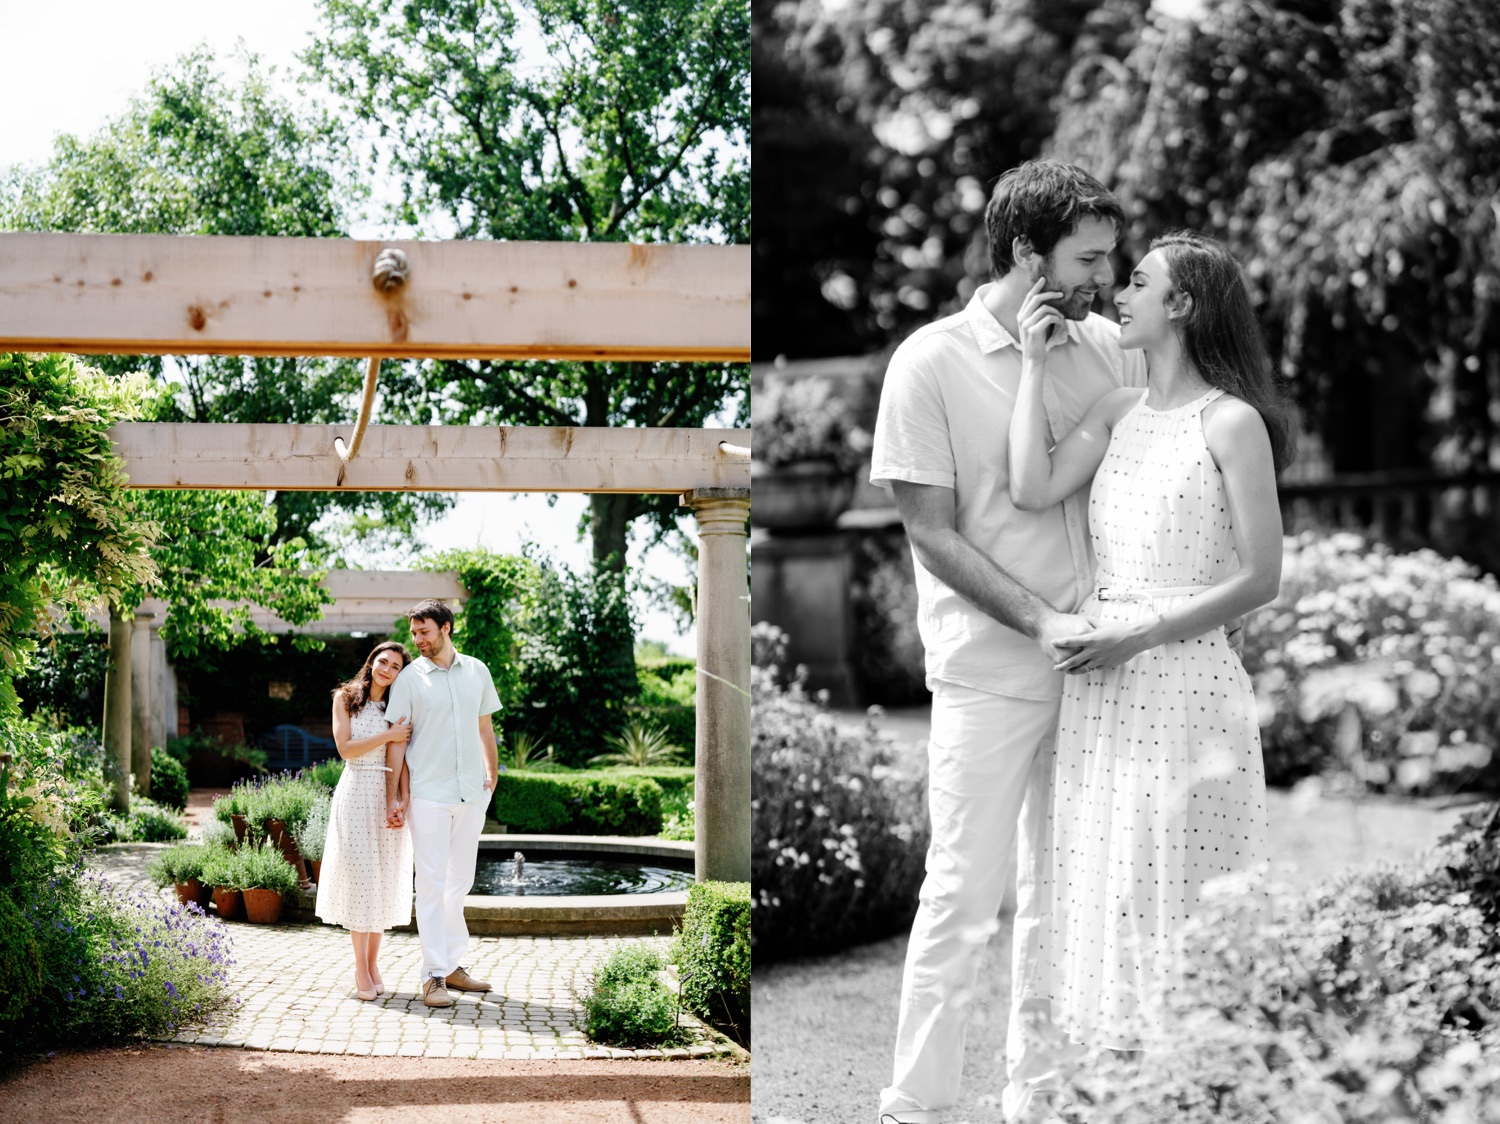 Chicago Botanic Gardens Engagement Photos | Chicago Wedding Photographer and Videographer